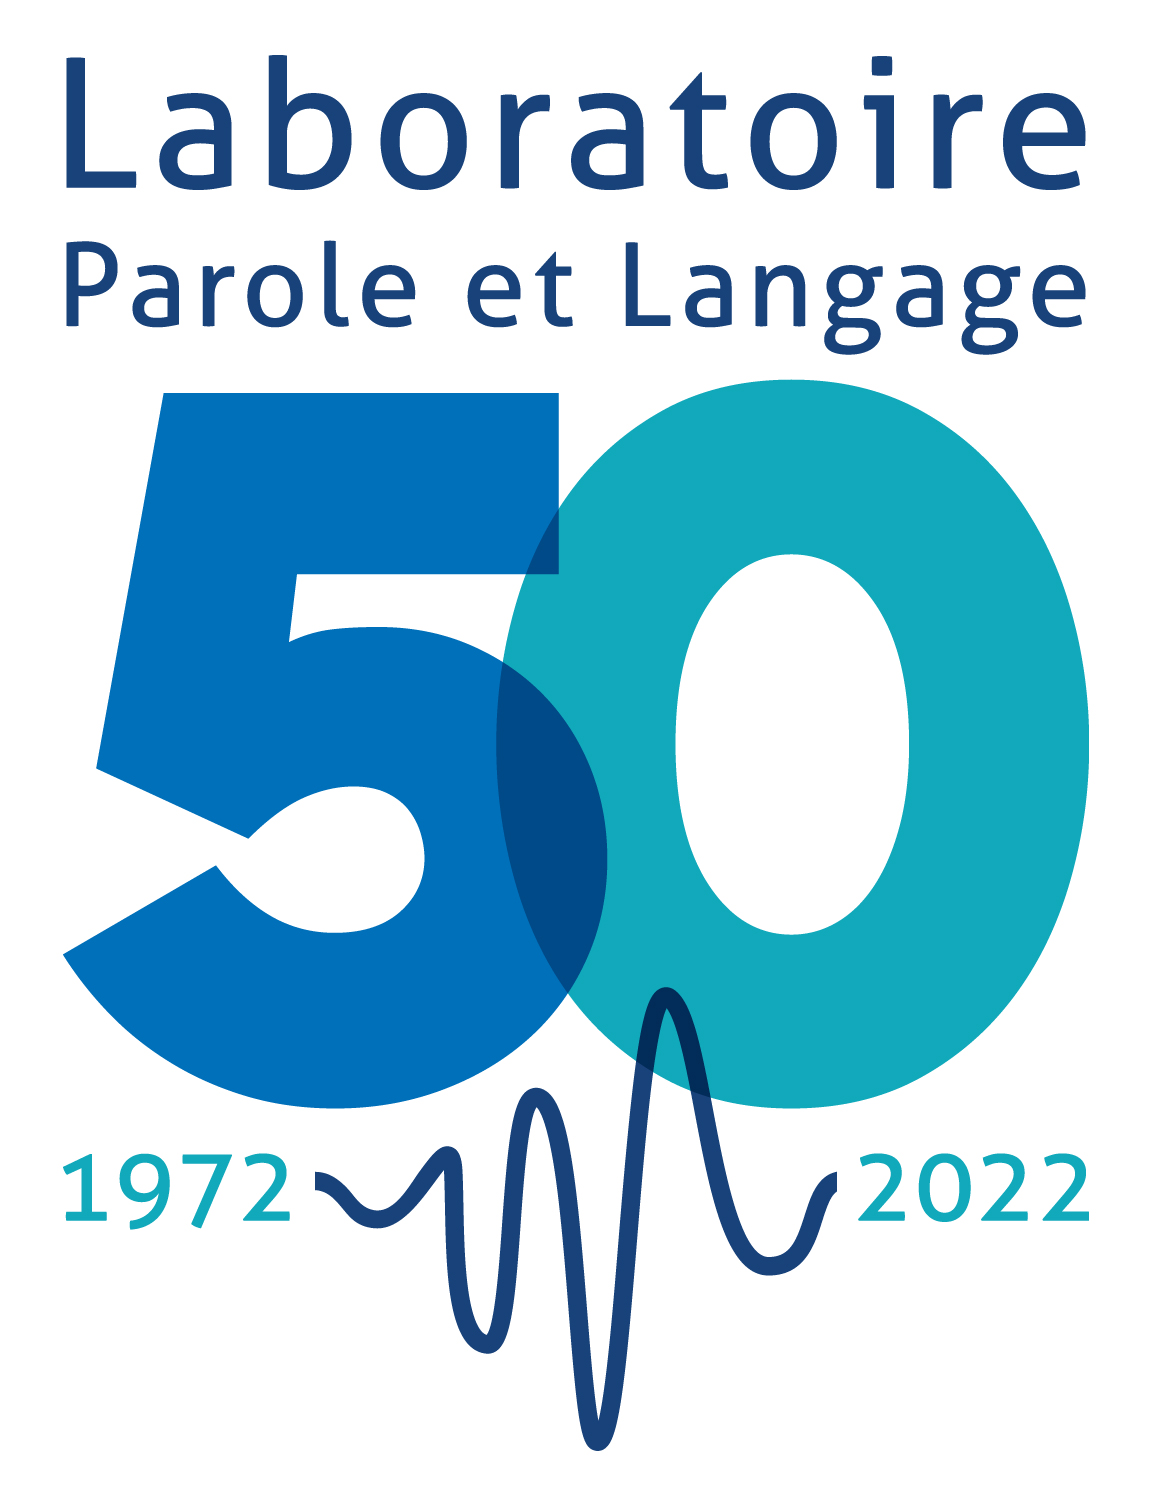 The LPL celebrates its 50th anniversary!